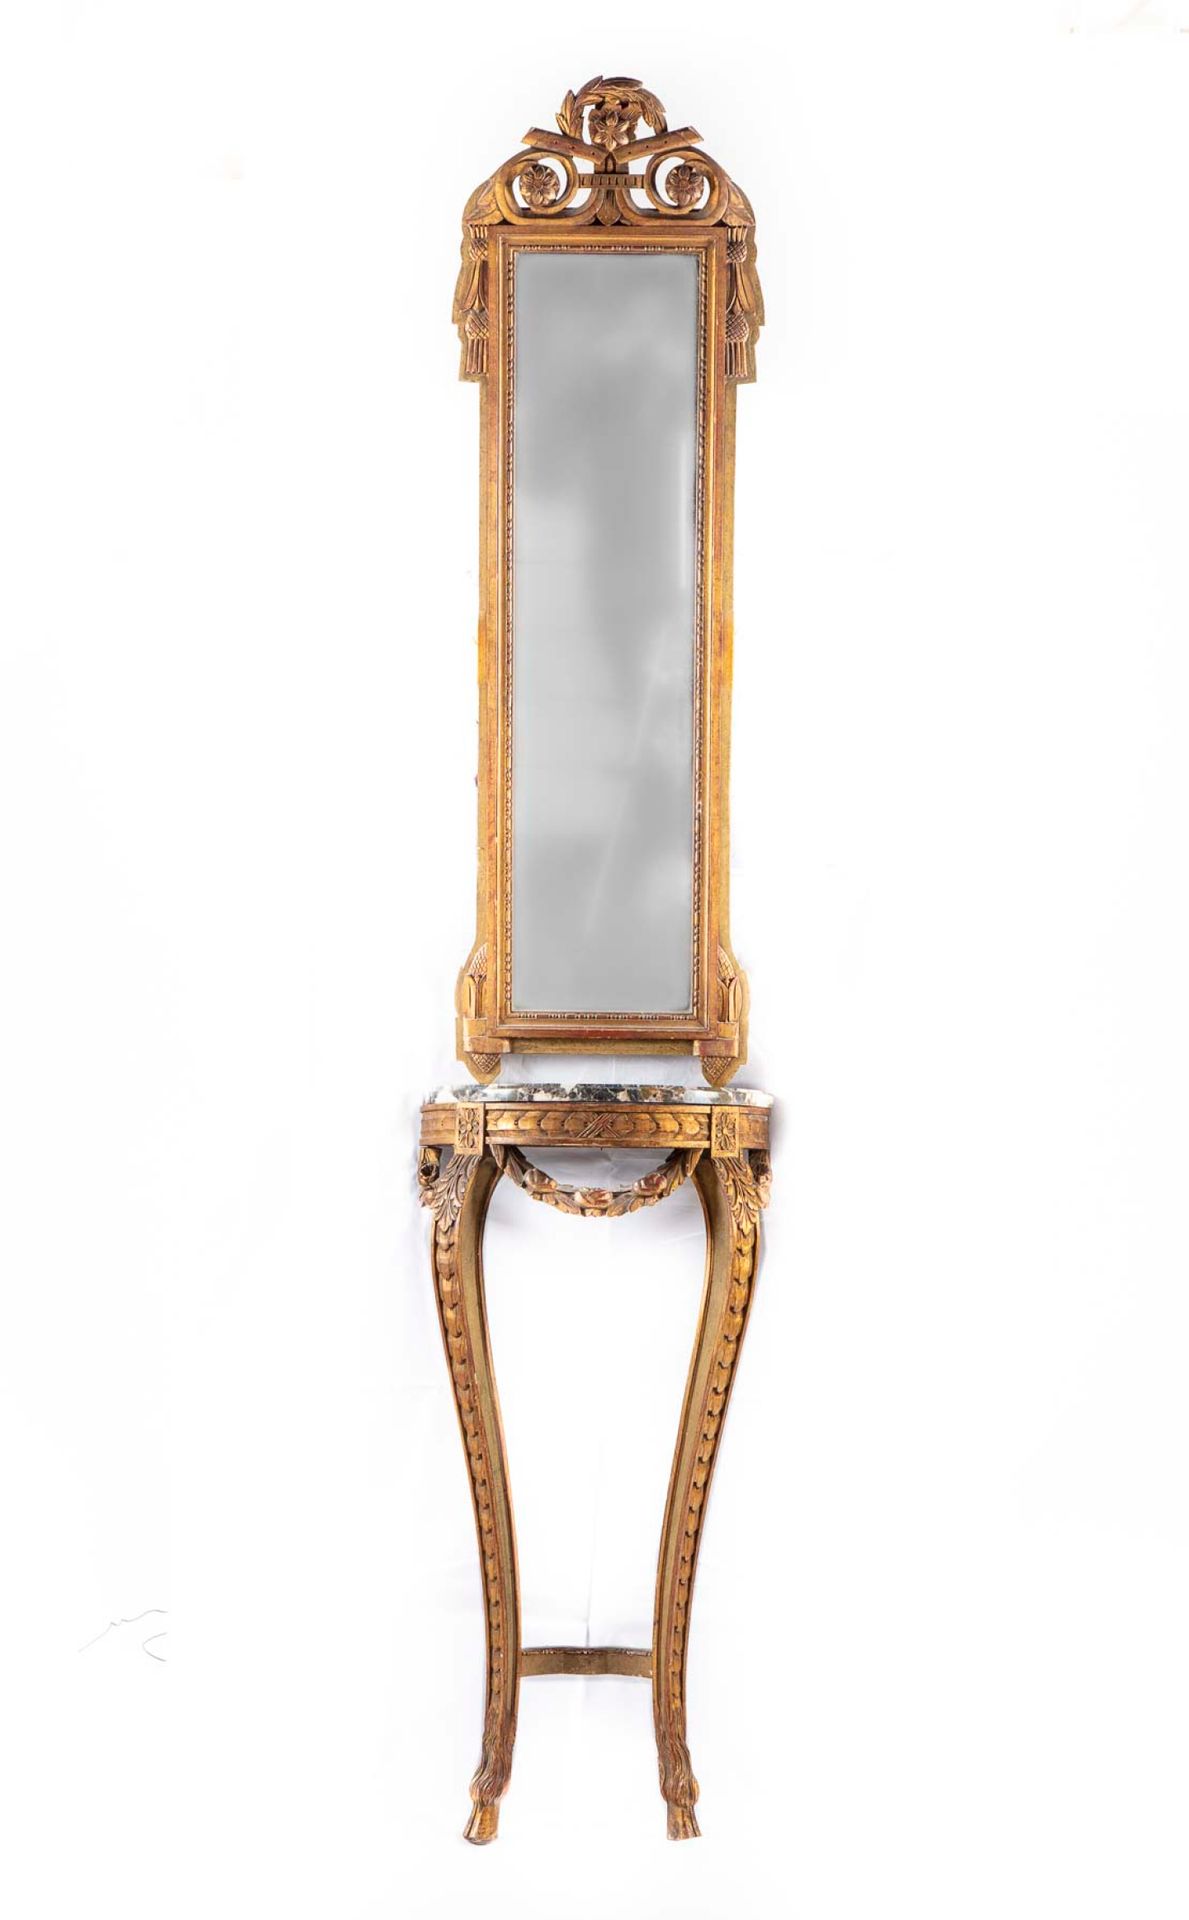 Null 带镜子的小型镀金木质控制台，模压和雕刻有树叶和花环，镜子的踏板上有镂空的树叶

路易十六风格，20世纪初

H.200 cm; L. : 43 cm